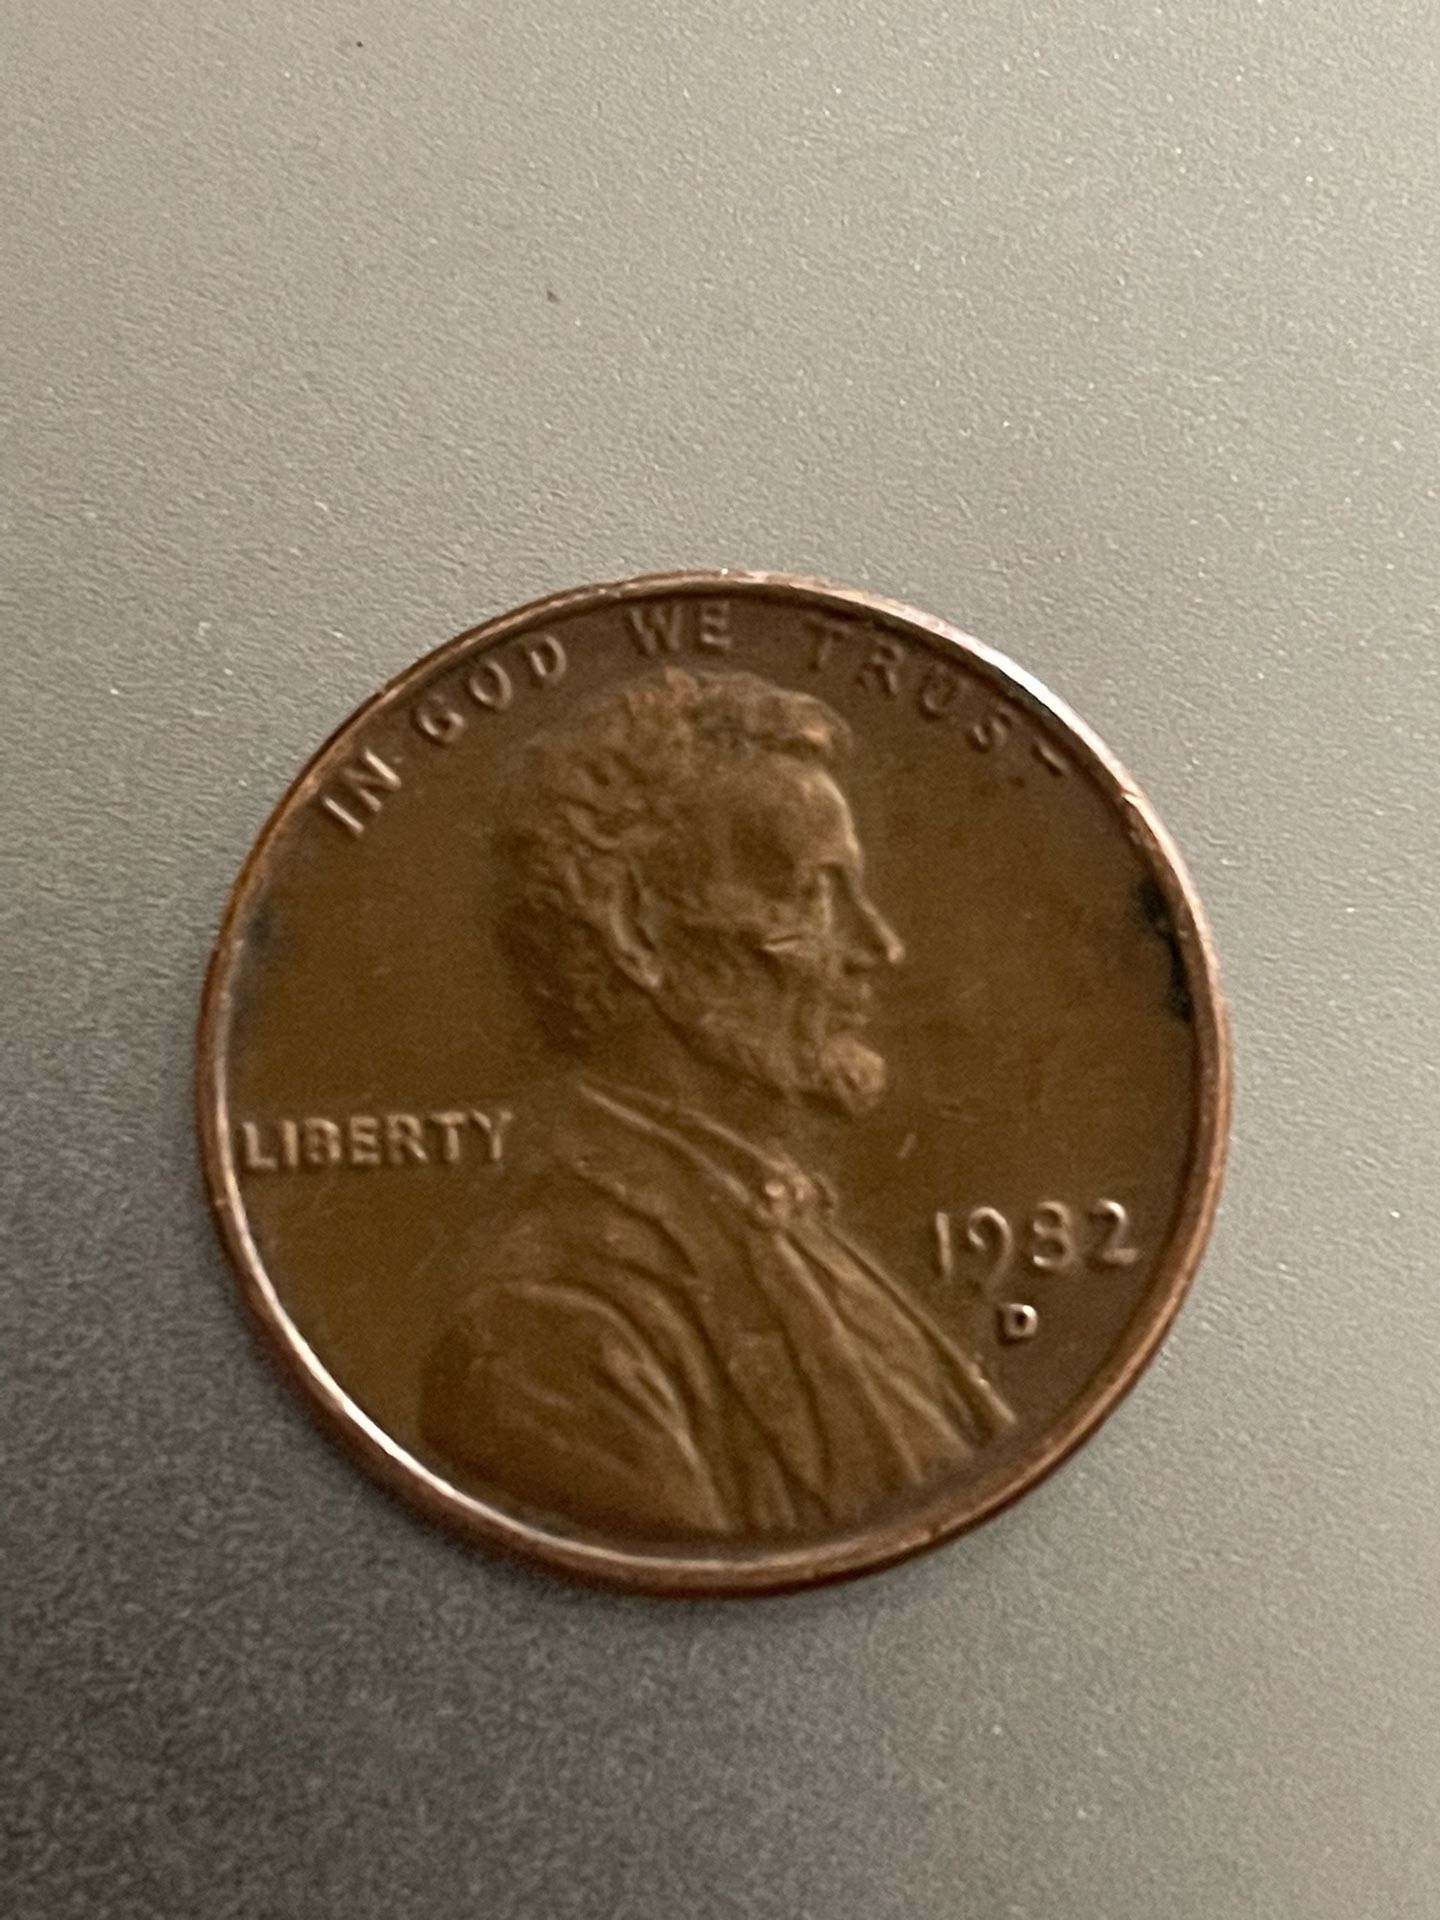 3.1 1982 Penny